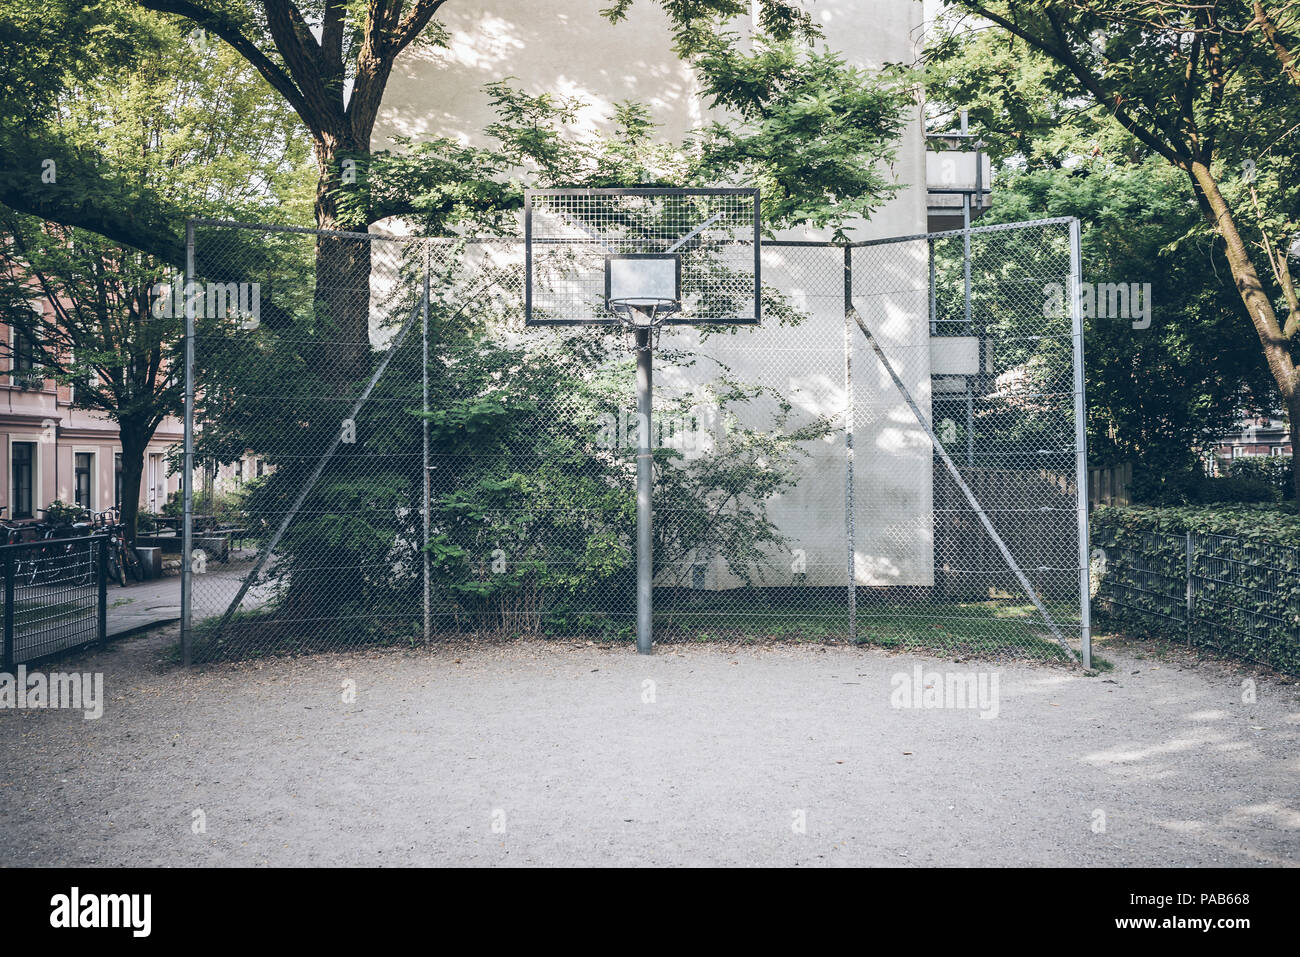 basketball court in residential neighborhood Stock Photo